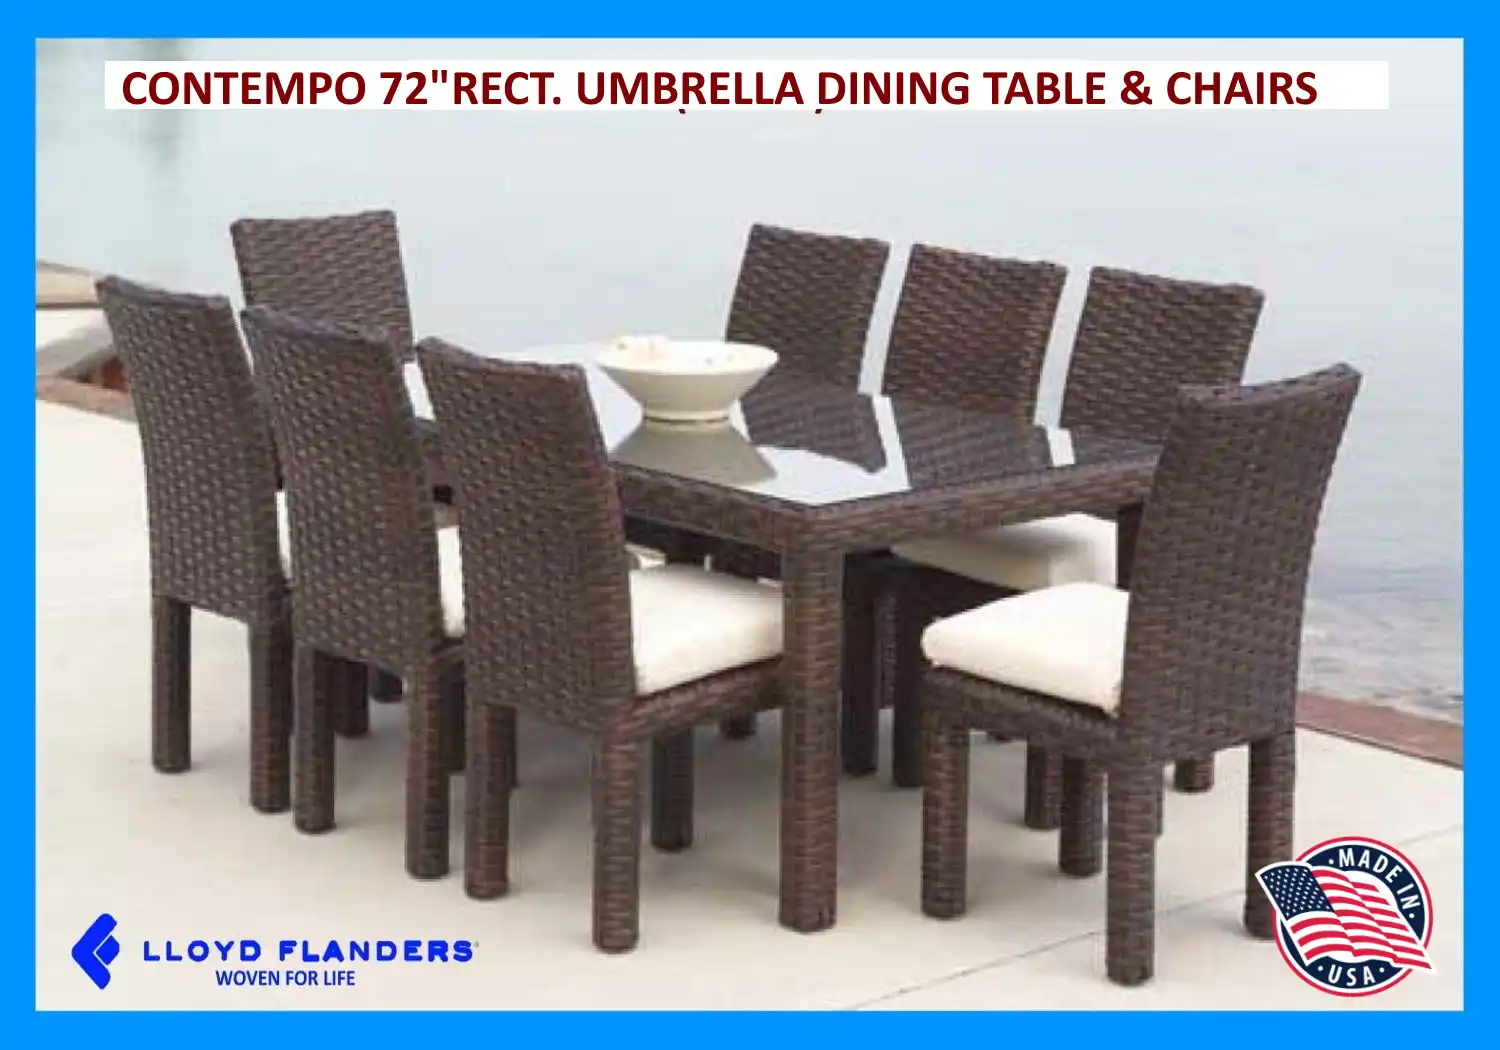 CONTEMPO 72" RECTANGULAR UMBRELLA DINING TABLE & CHAIRS